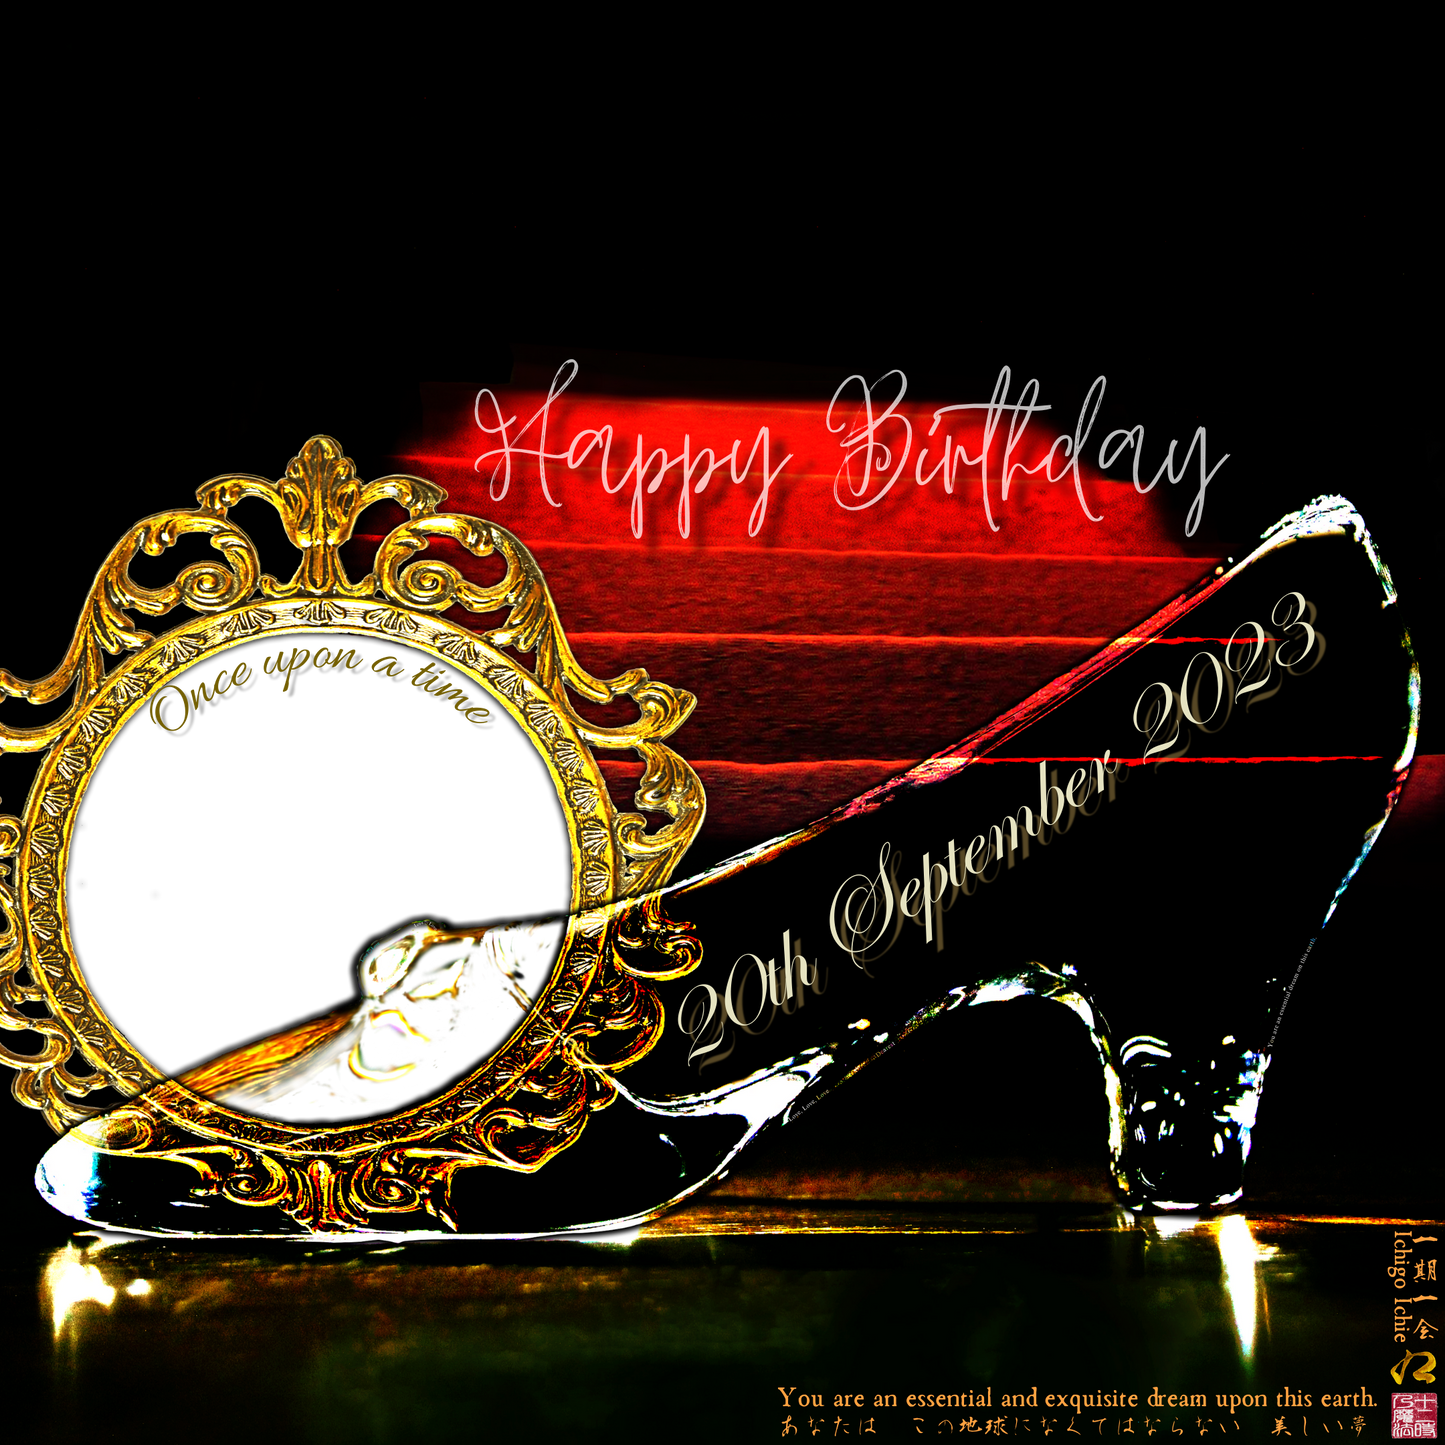 Happy Birthday Glass Slipper "Ichigo Ichie" 20th September 2023 the Left (1-of-1) NFT Art